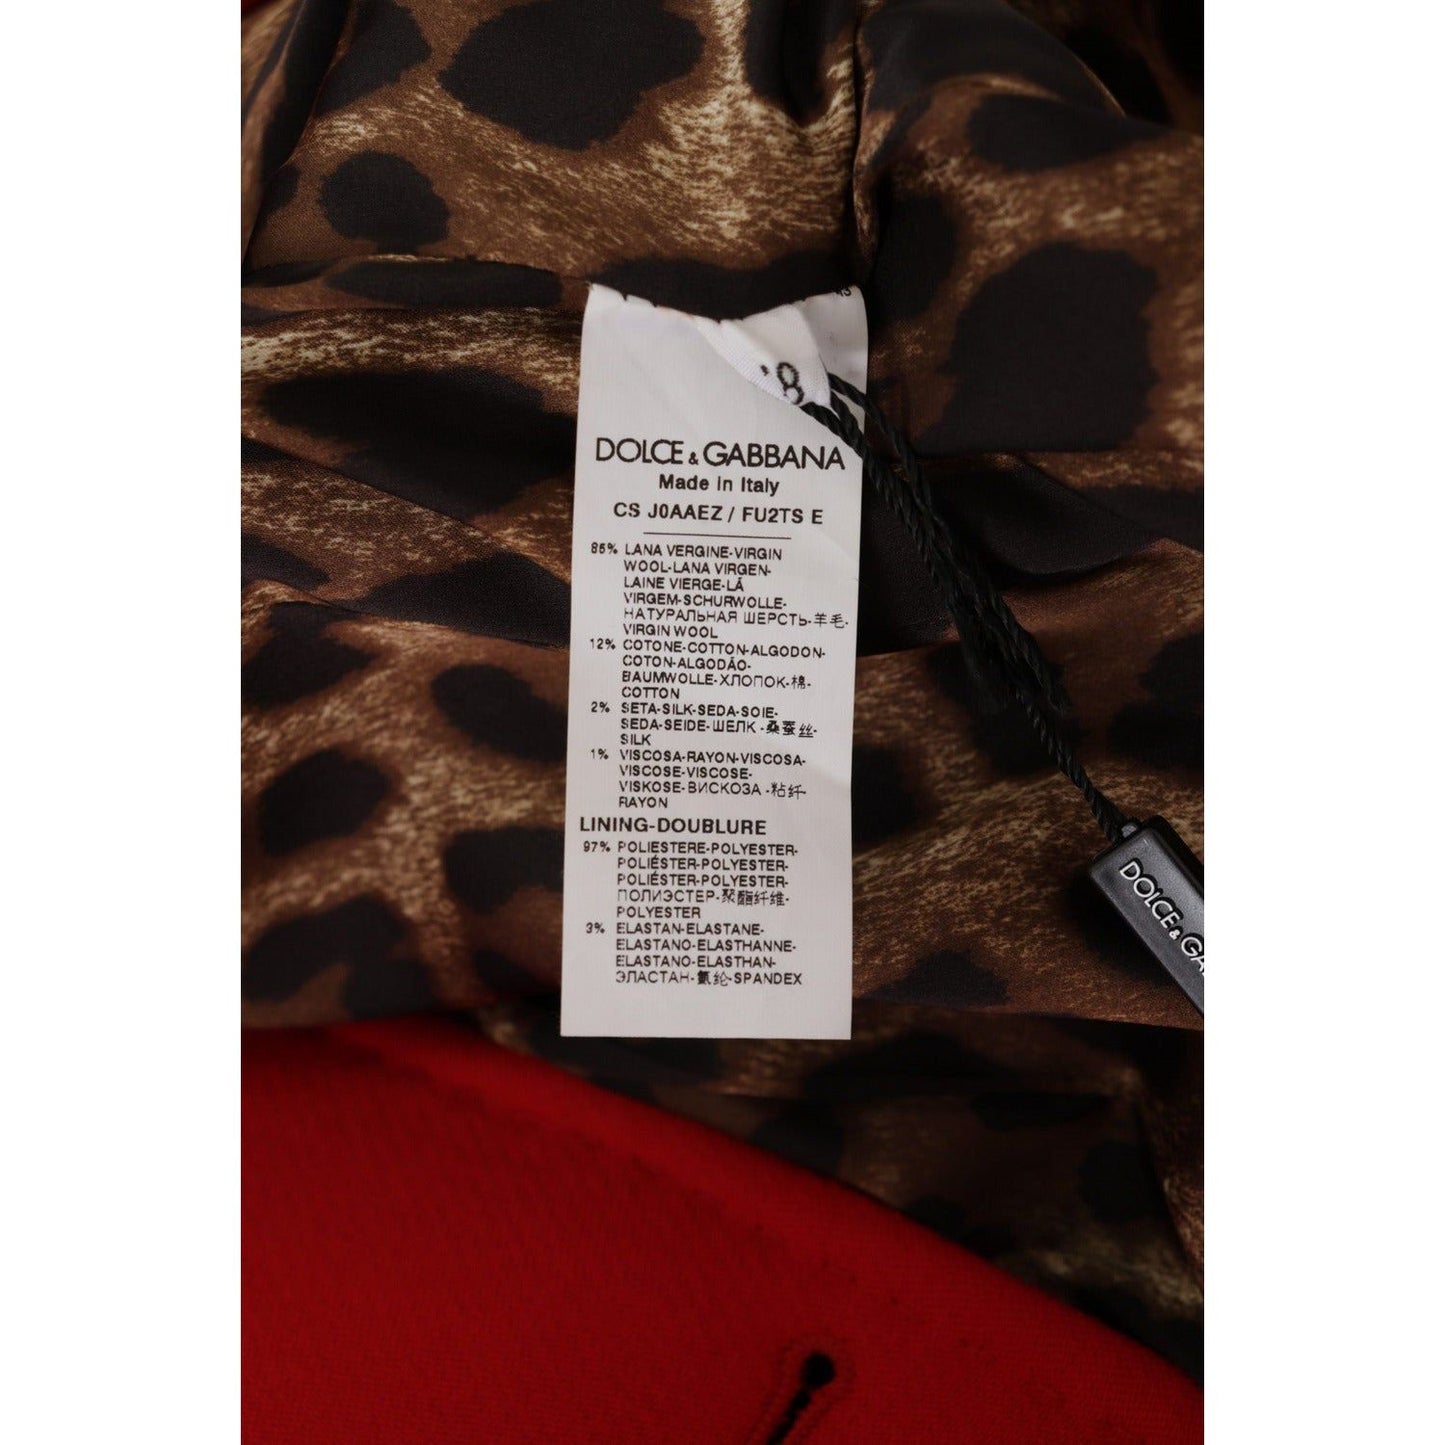 Dolce & Gabbana Elegant Red Leopard Trench Coat red-leopard-wool-trenchcoat-jacket